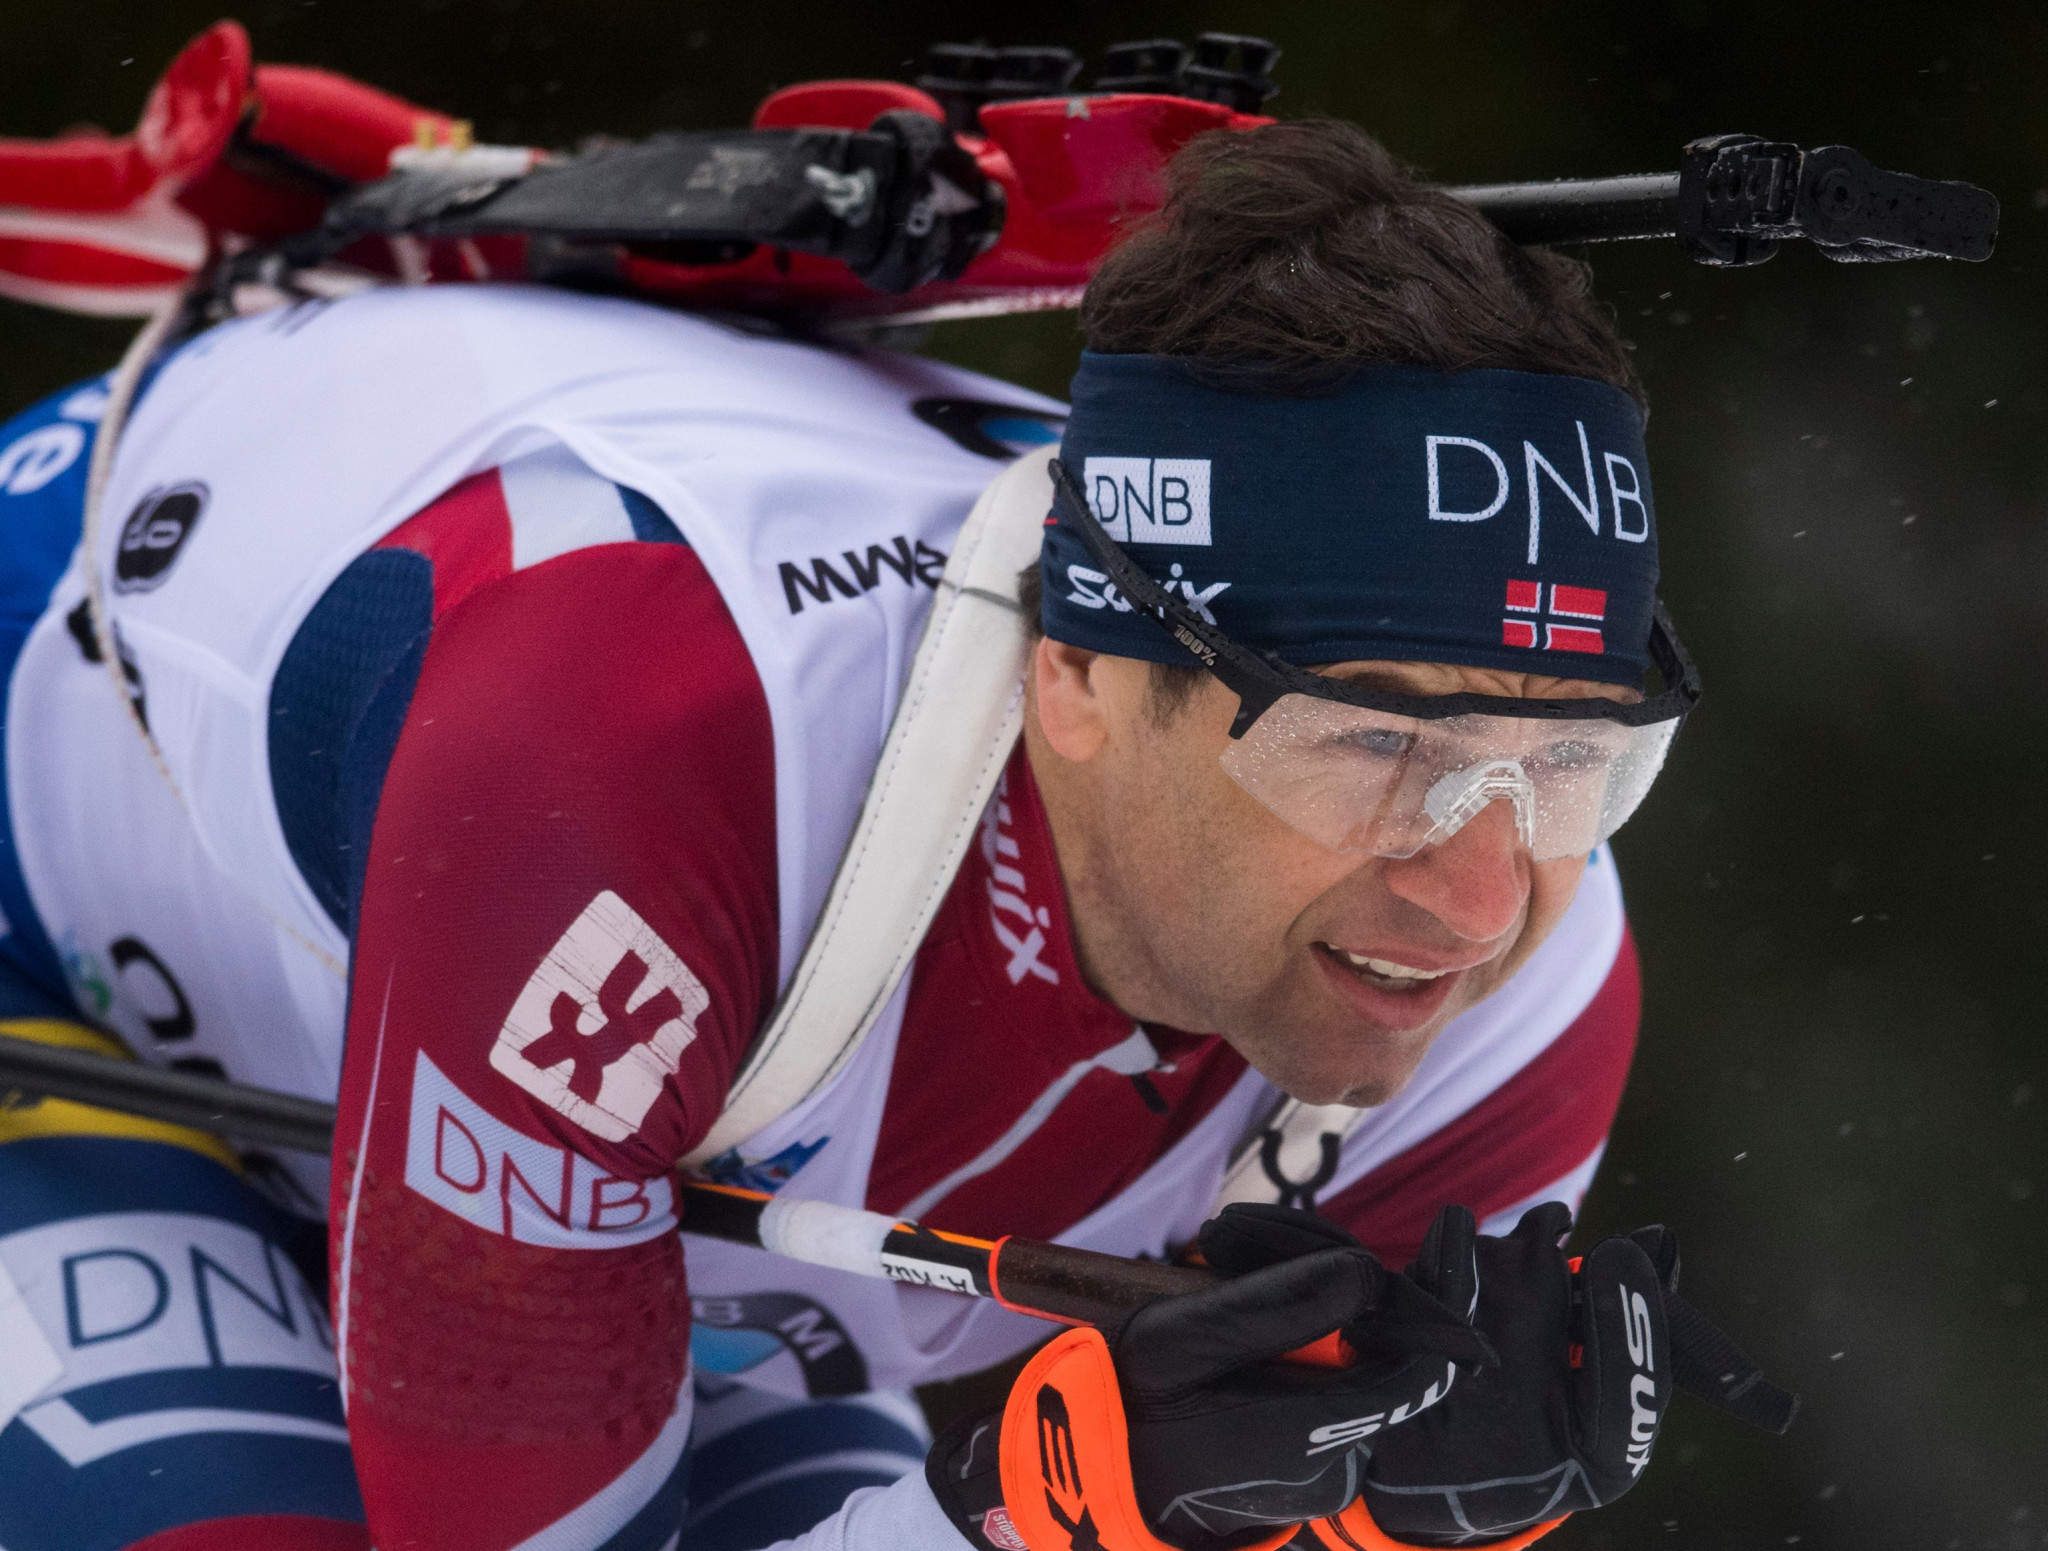 Norwegian biathlon legend Ole Einar Bjørndalen has again announced his retirement from the sport ©Getty Images